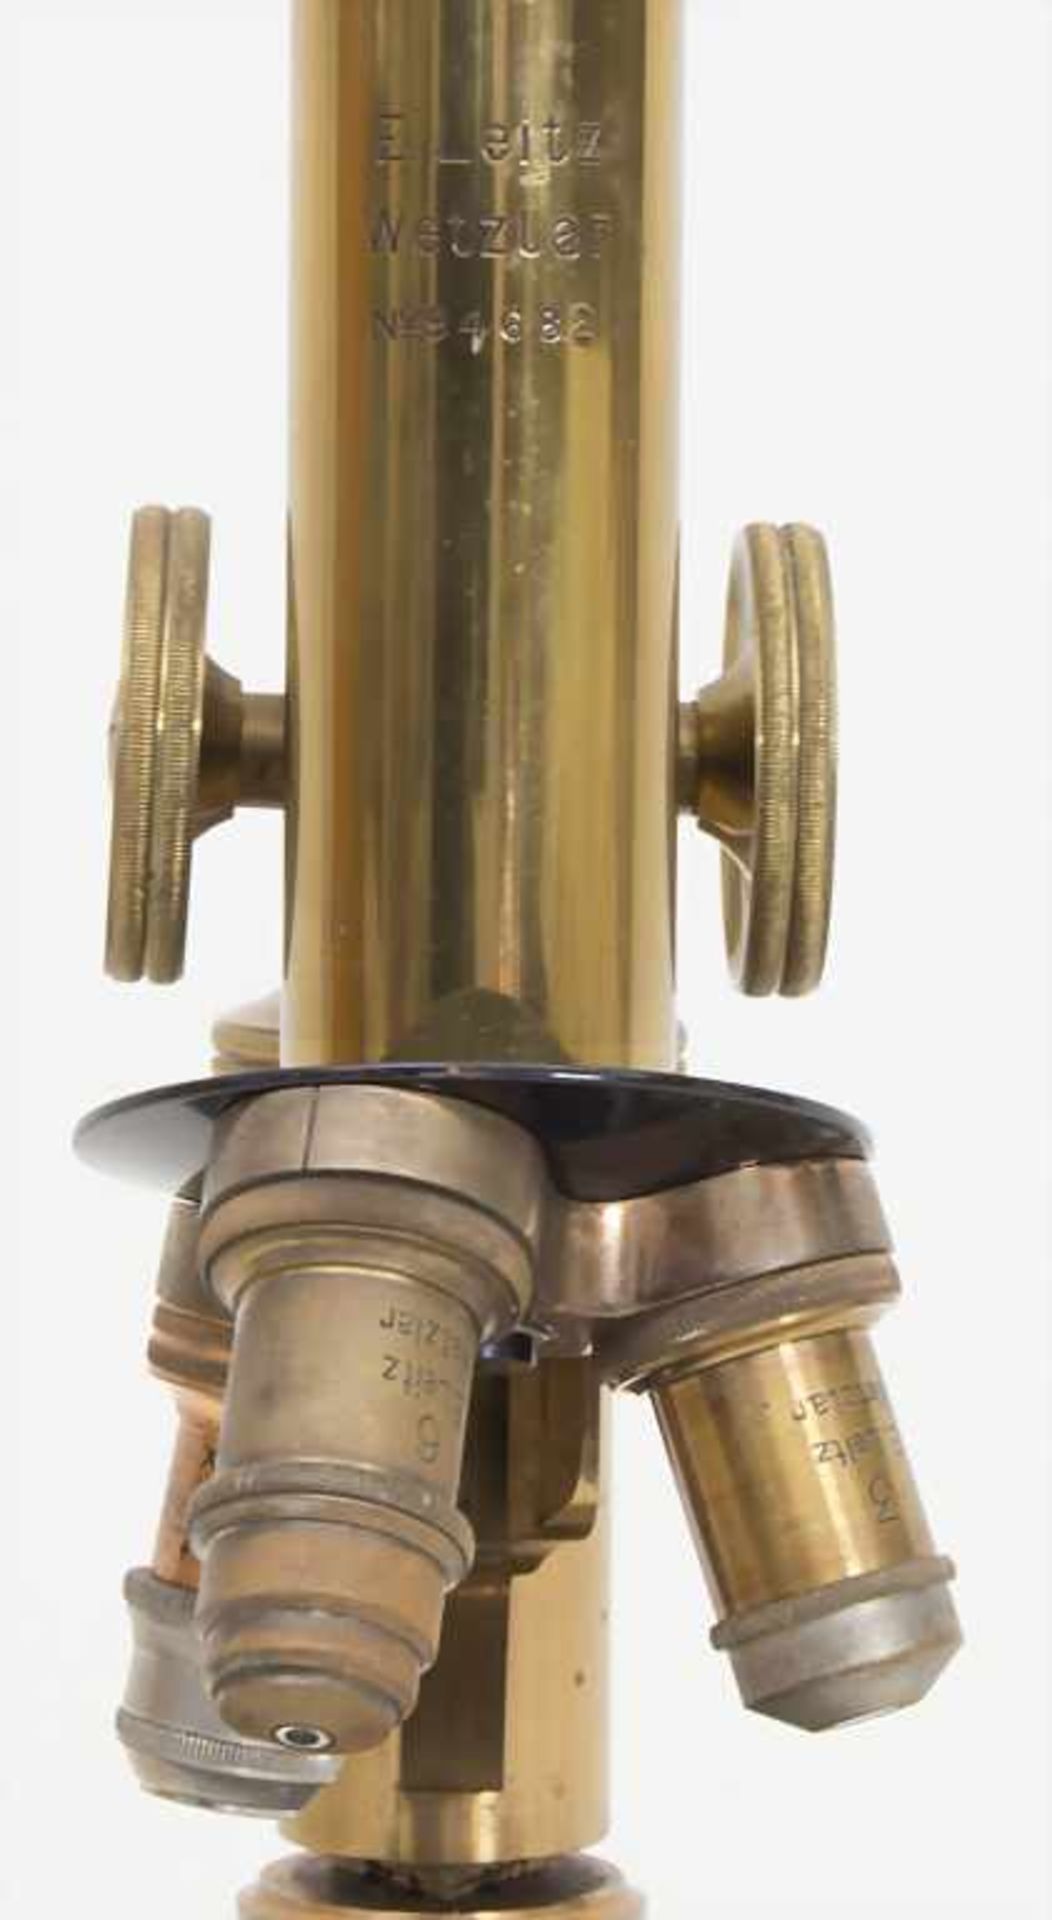 Mikroskop / A microscope, E. Leitz, WetzlarMaterial: Stativ in Messing schwarz lackiert, Holzkasten, - Bild 9 aus 11